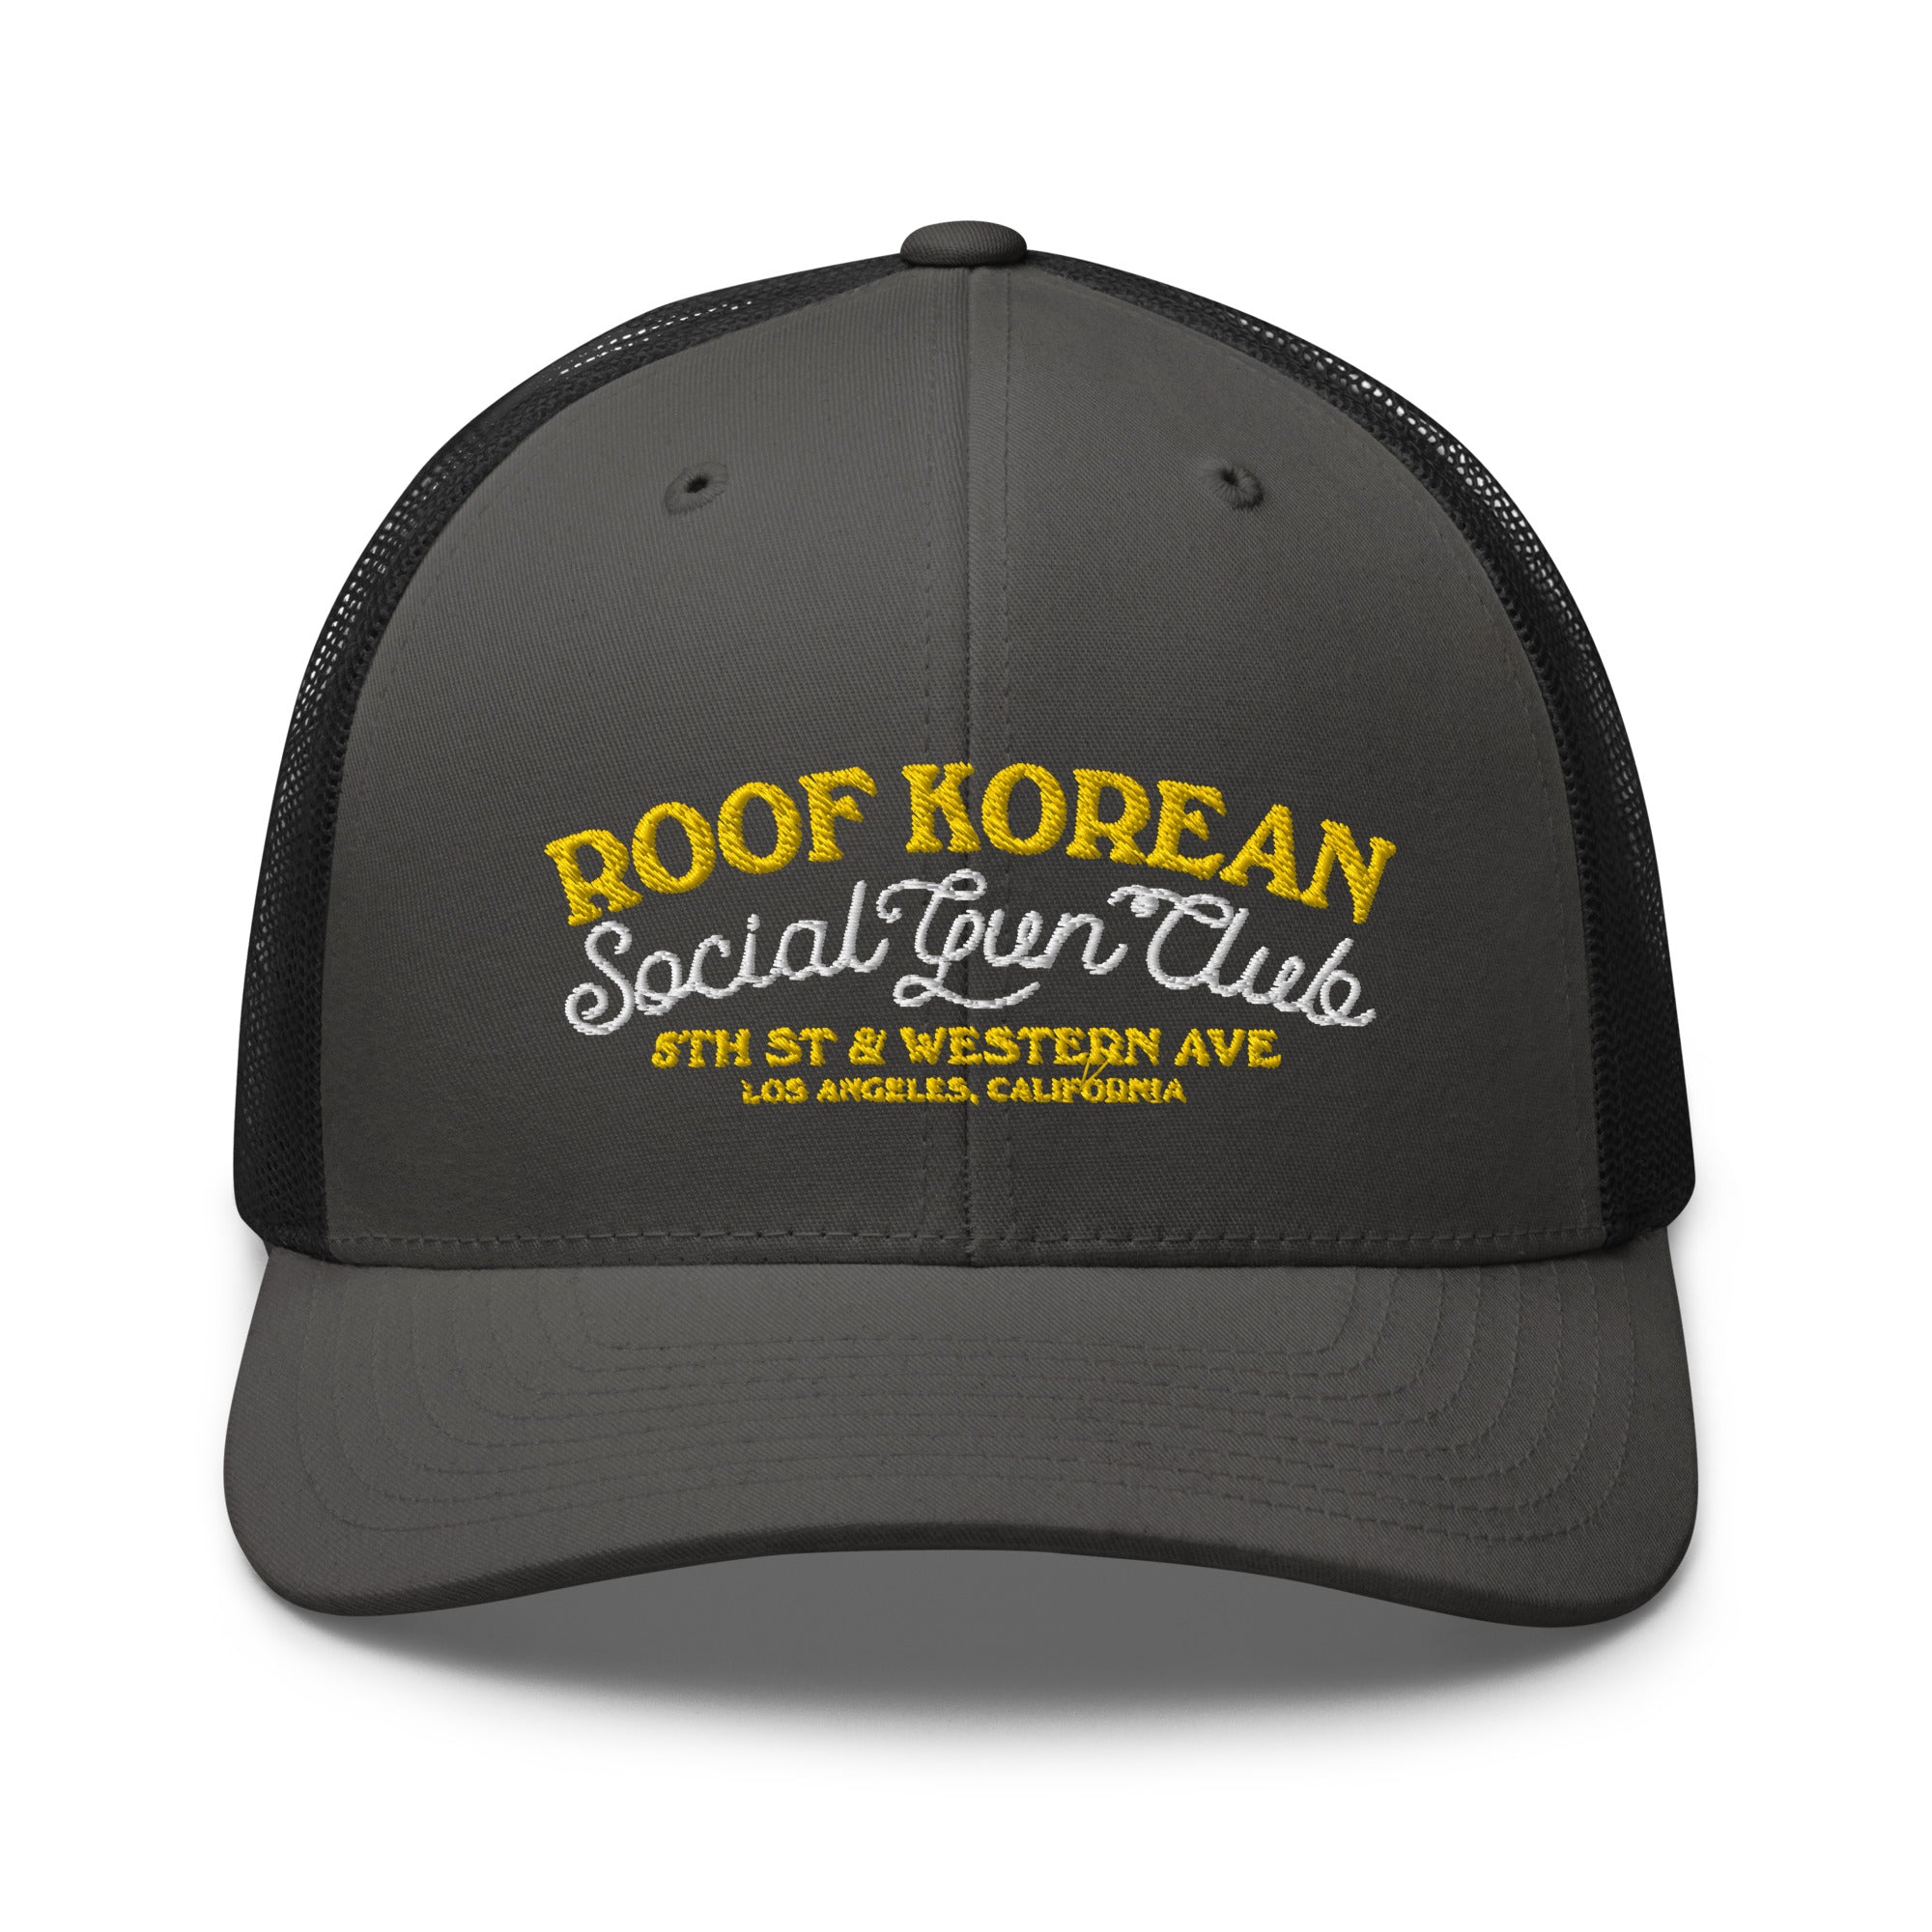 Roof Korean Social Gun Club Trucker Cap